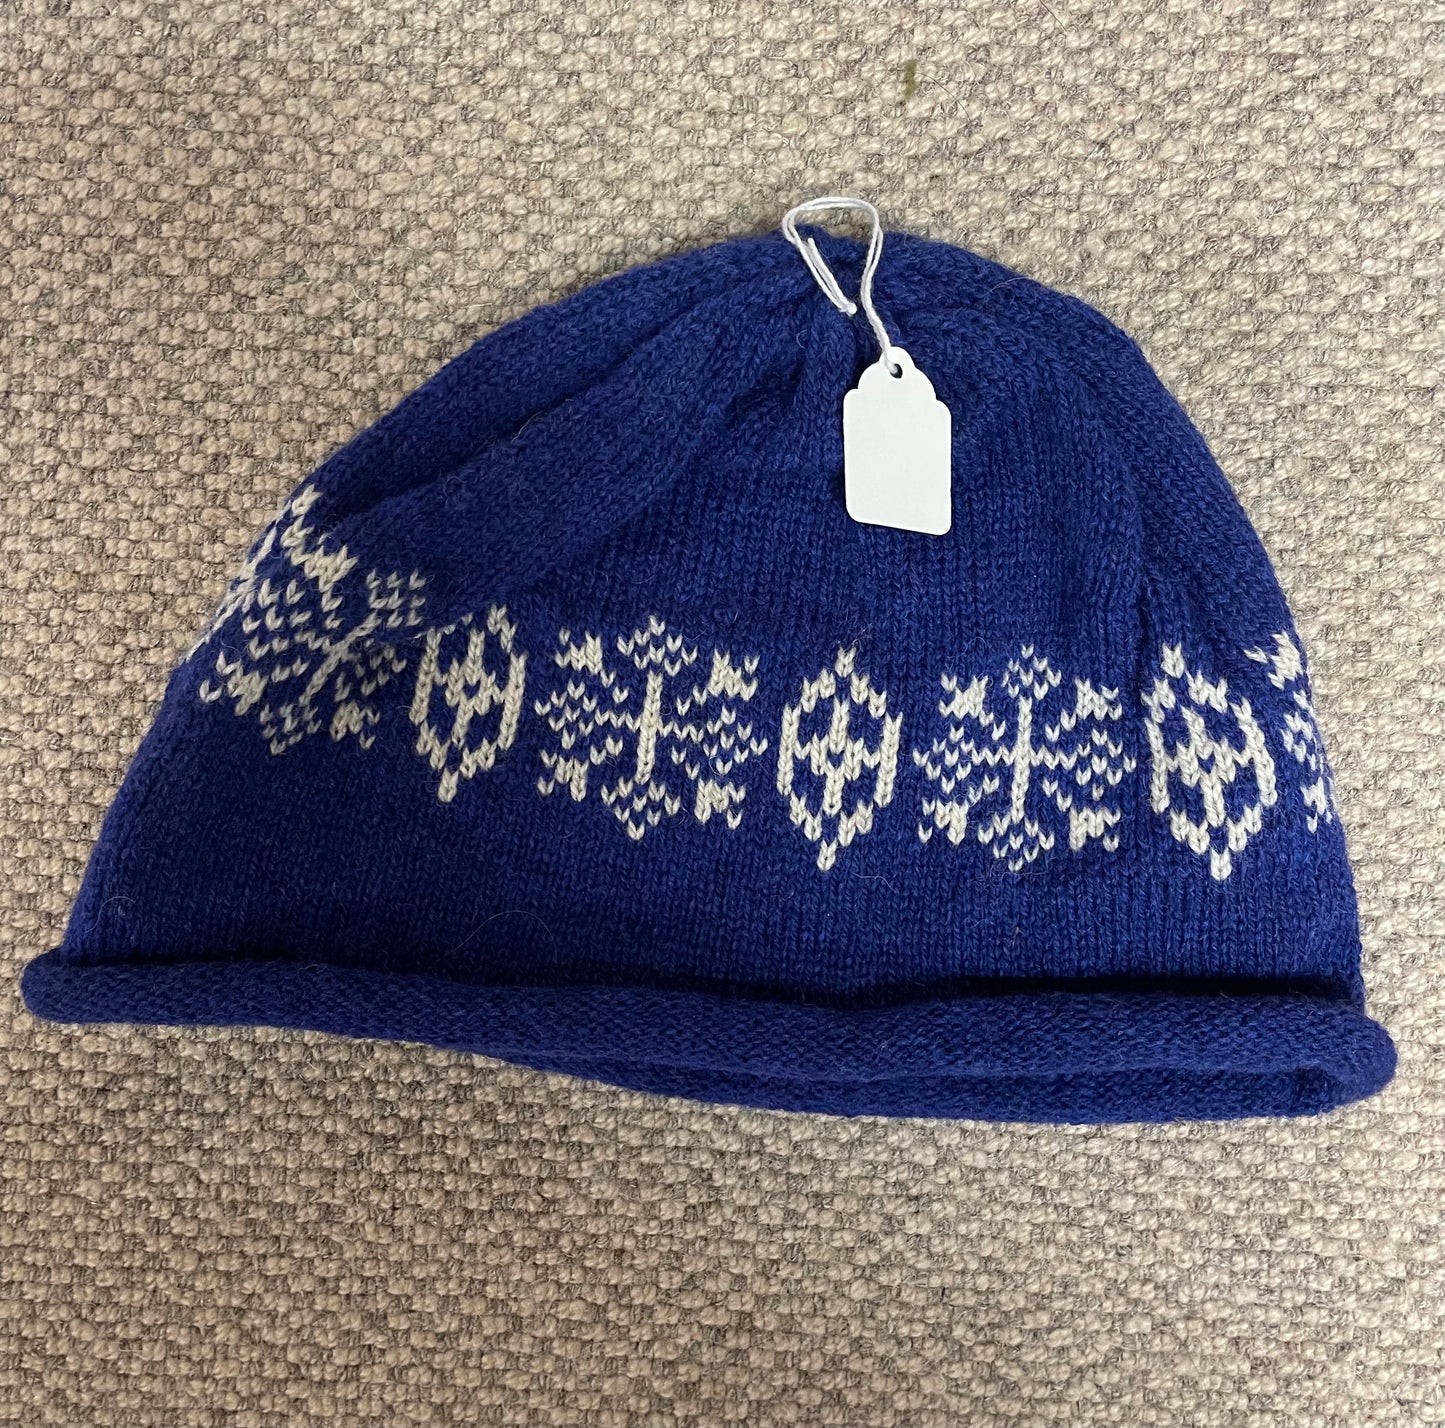 Blue and white Shetland Woollen hat